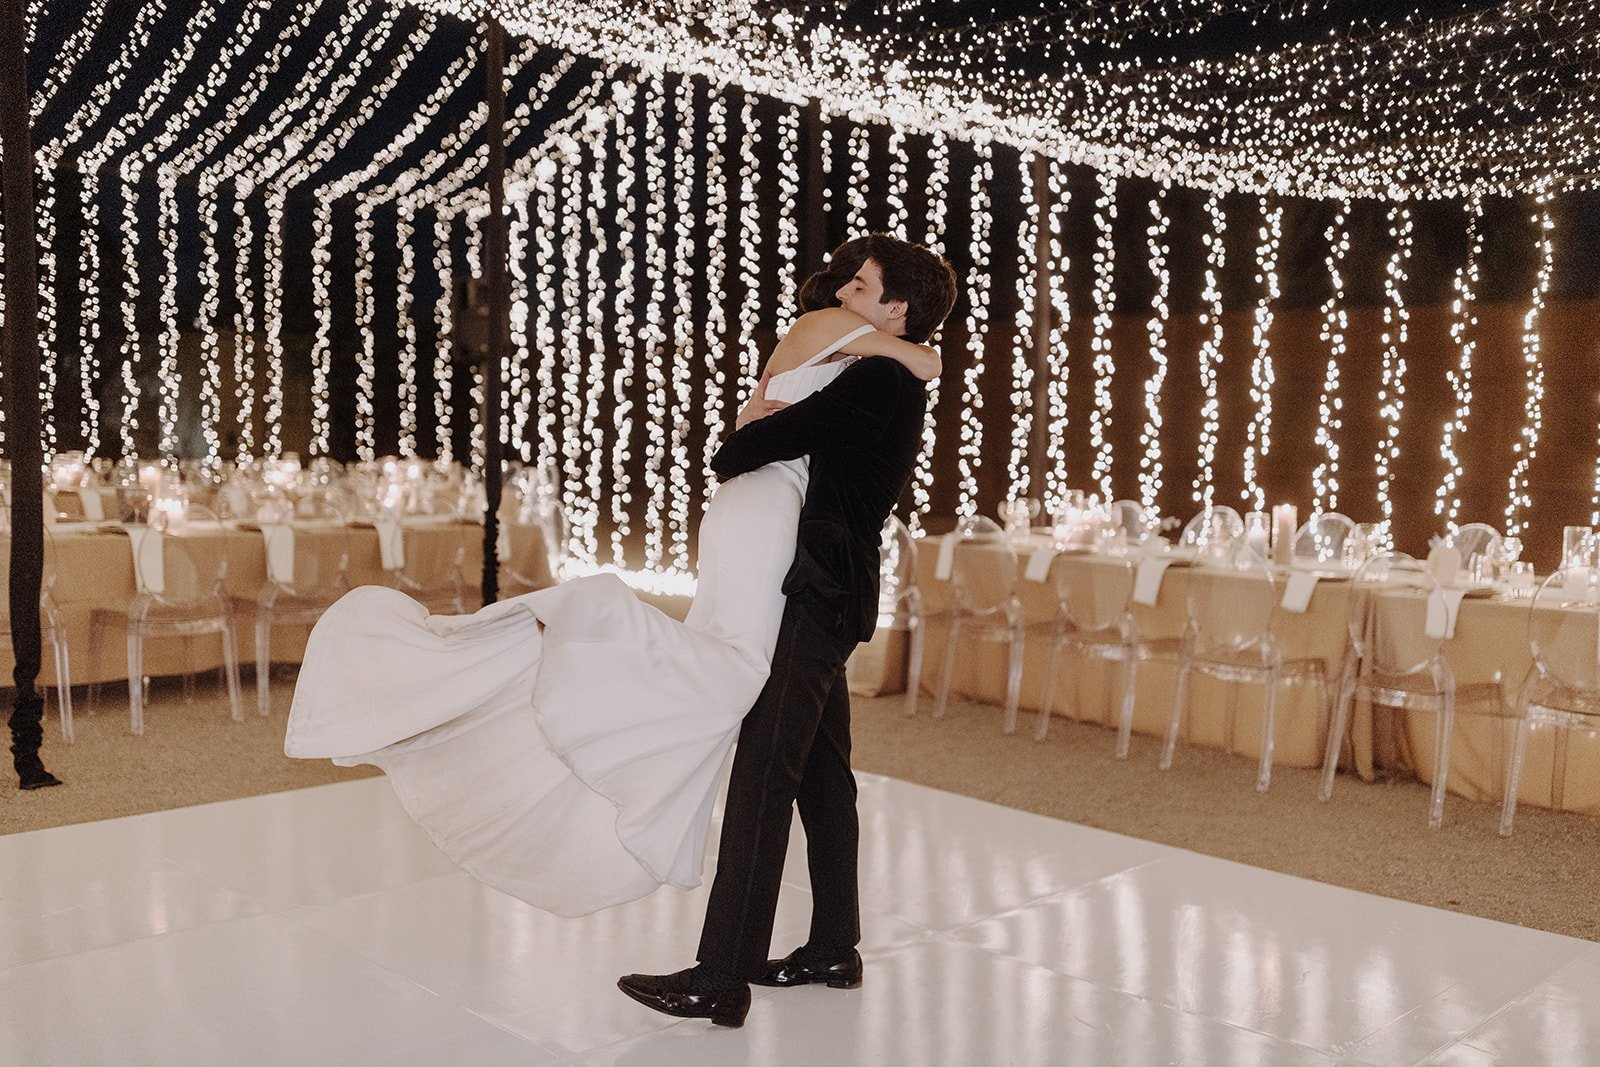 Bride and groom dancing on the dance floor under twinkle lights